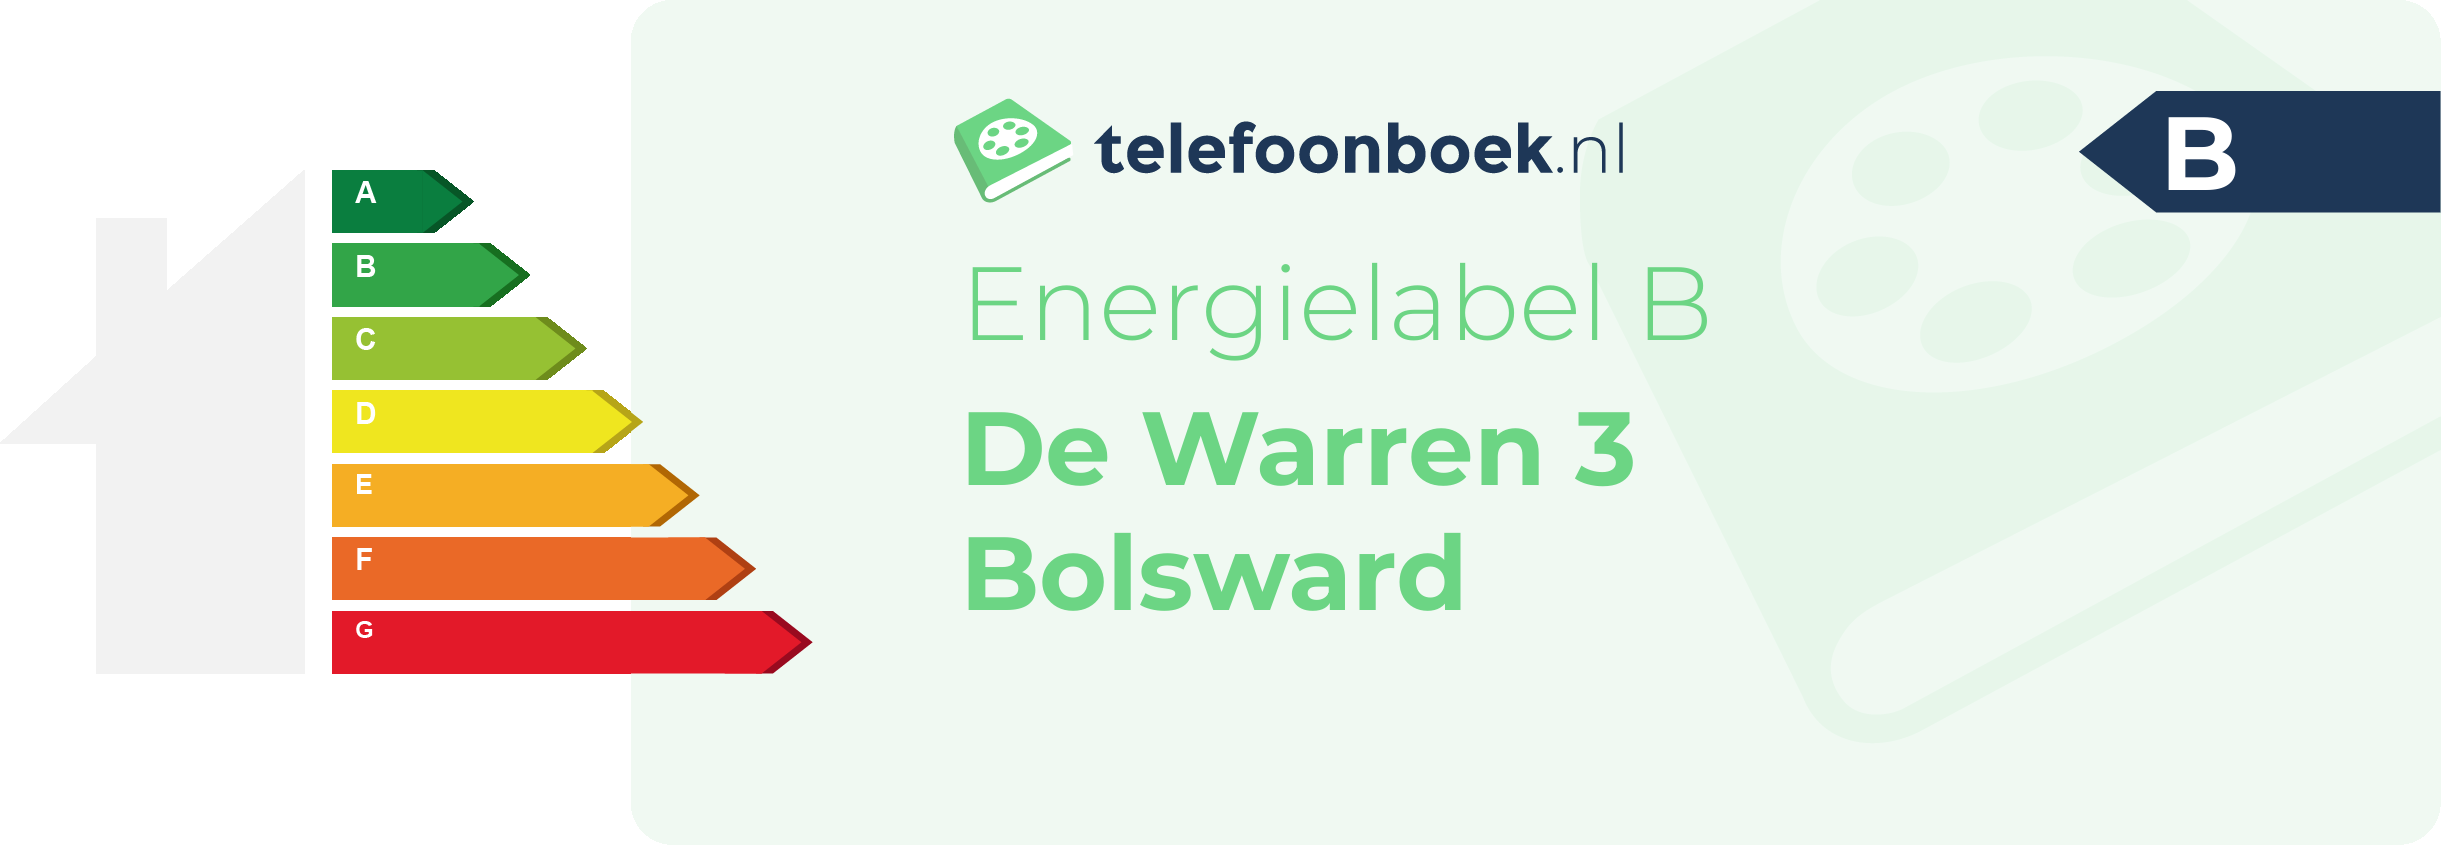 Energielabel De Warren 3 Bolsward